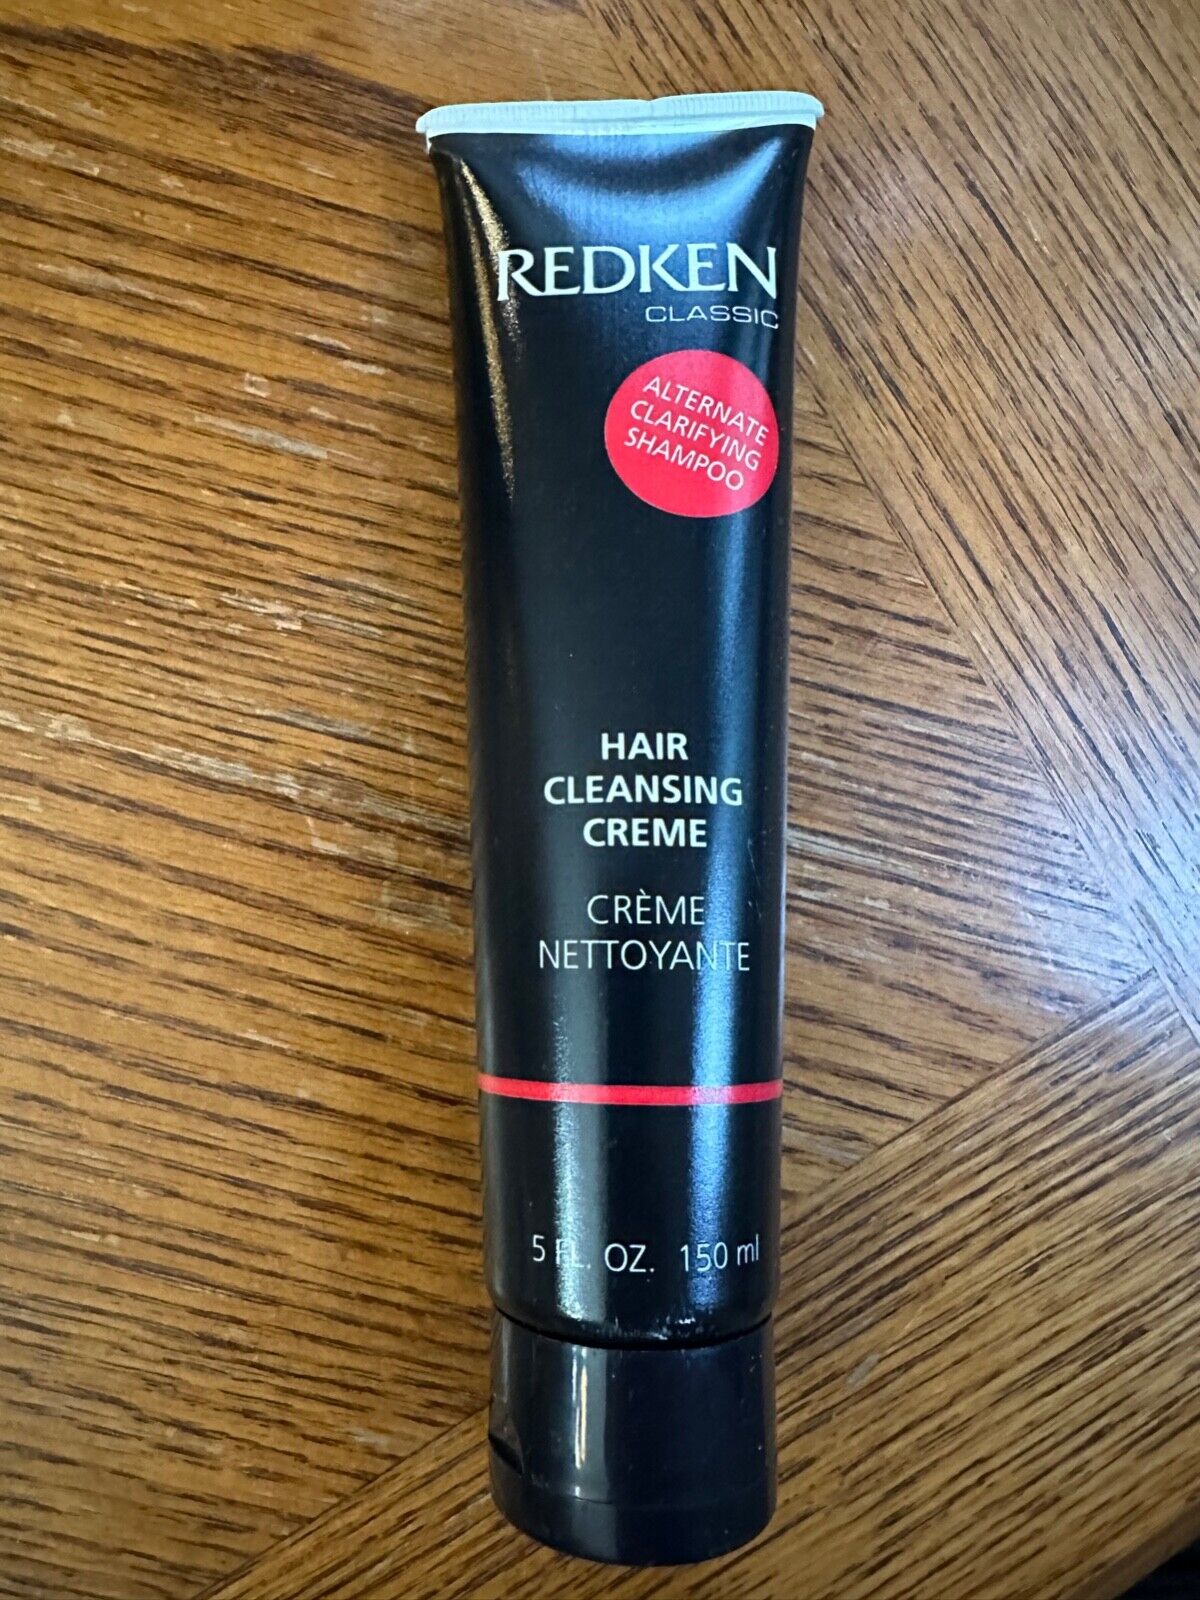 VTG Redken Hair Cleansing Creme Alternate Clarifying Shampoo 5 oz Black 1991 NOS